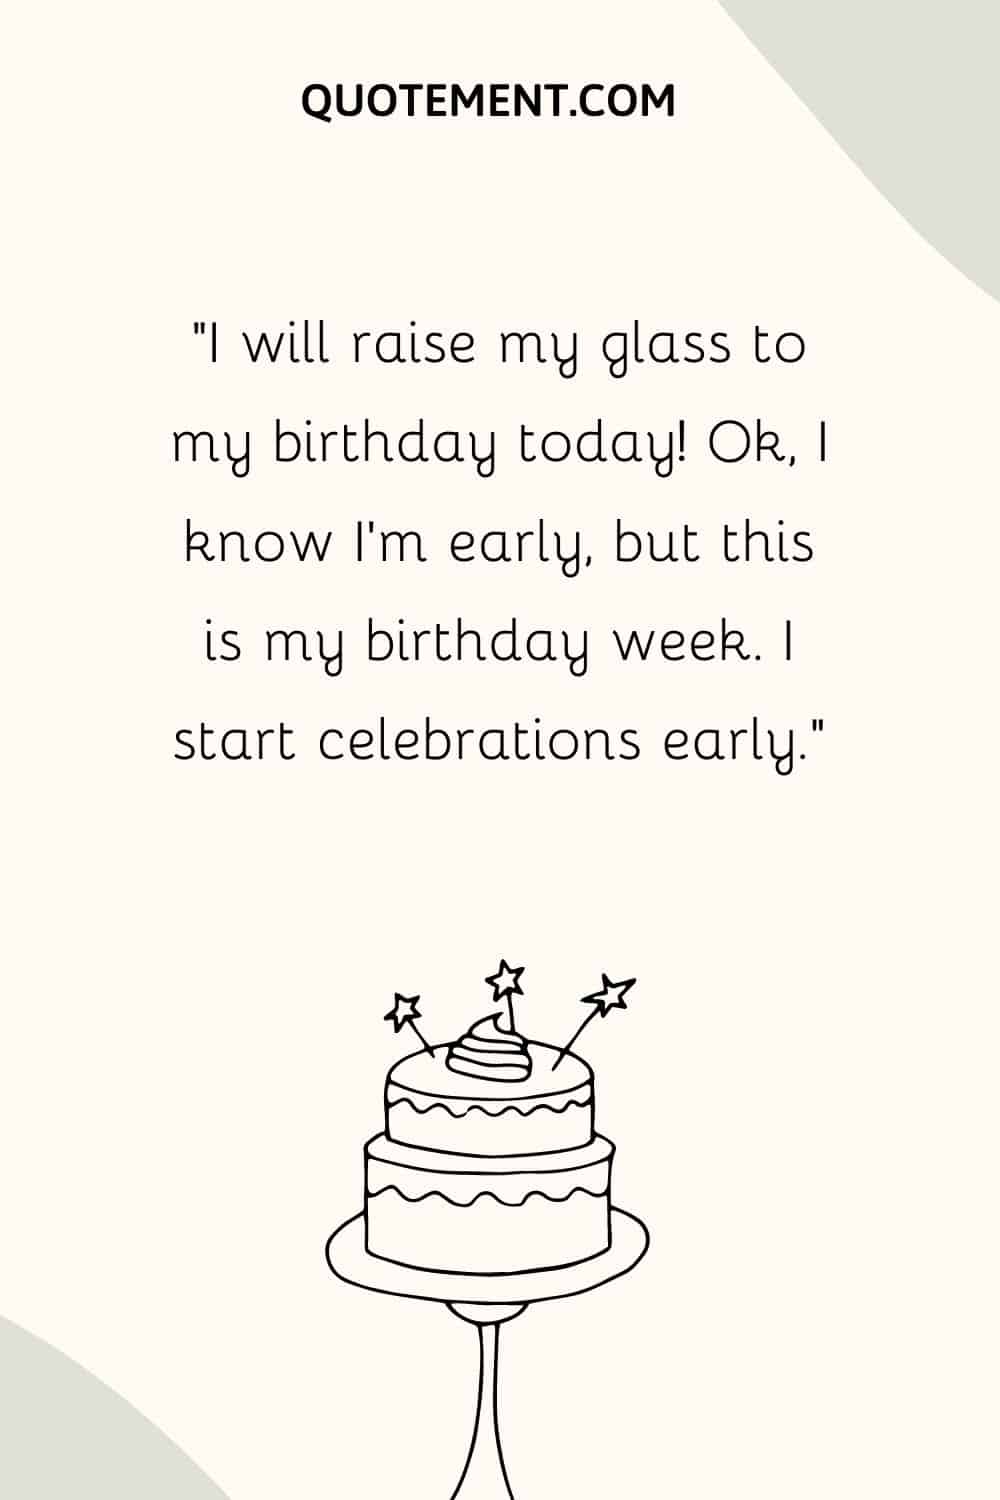 I will raise my glass to my birthday today